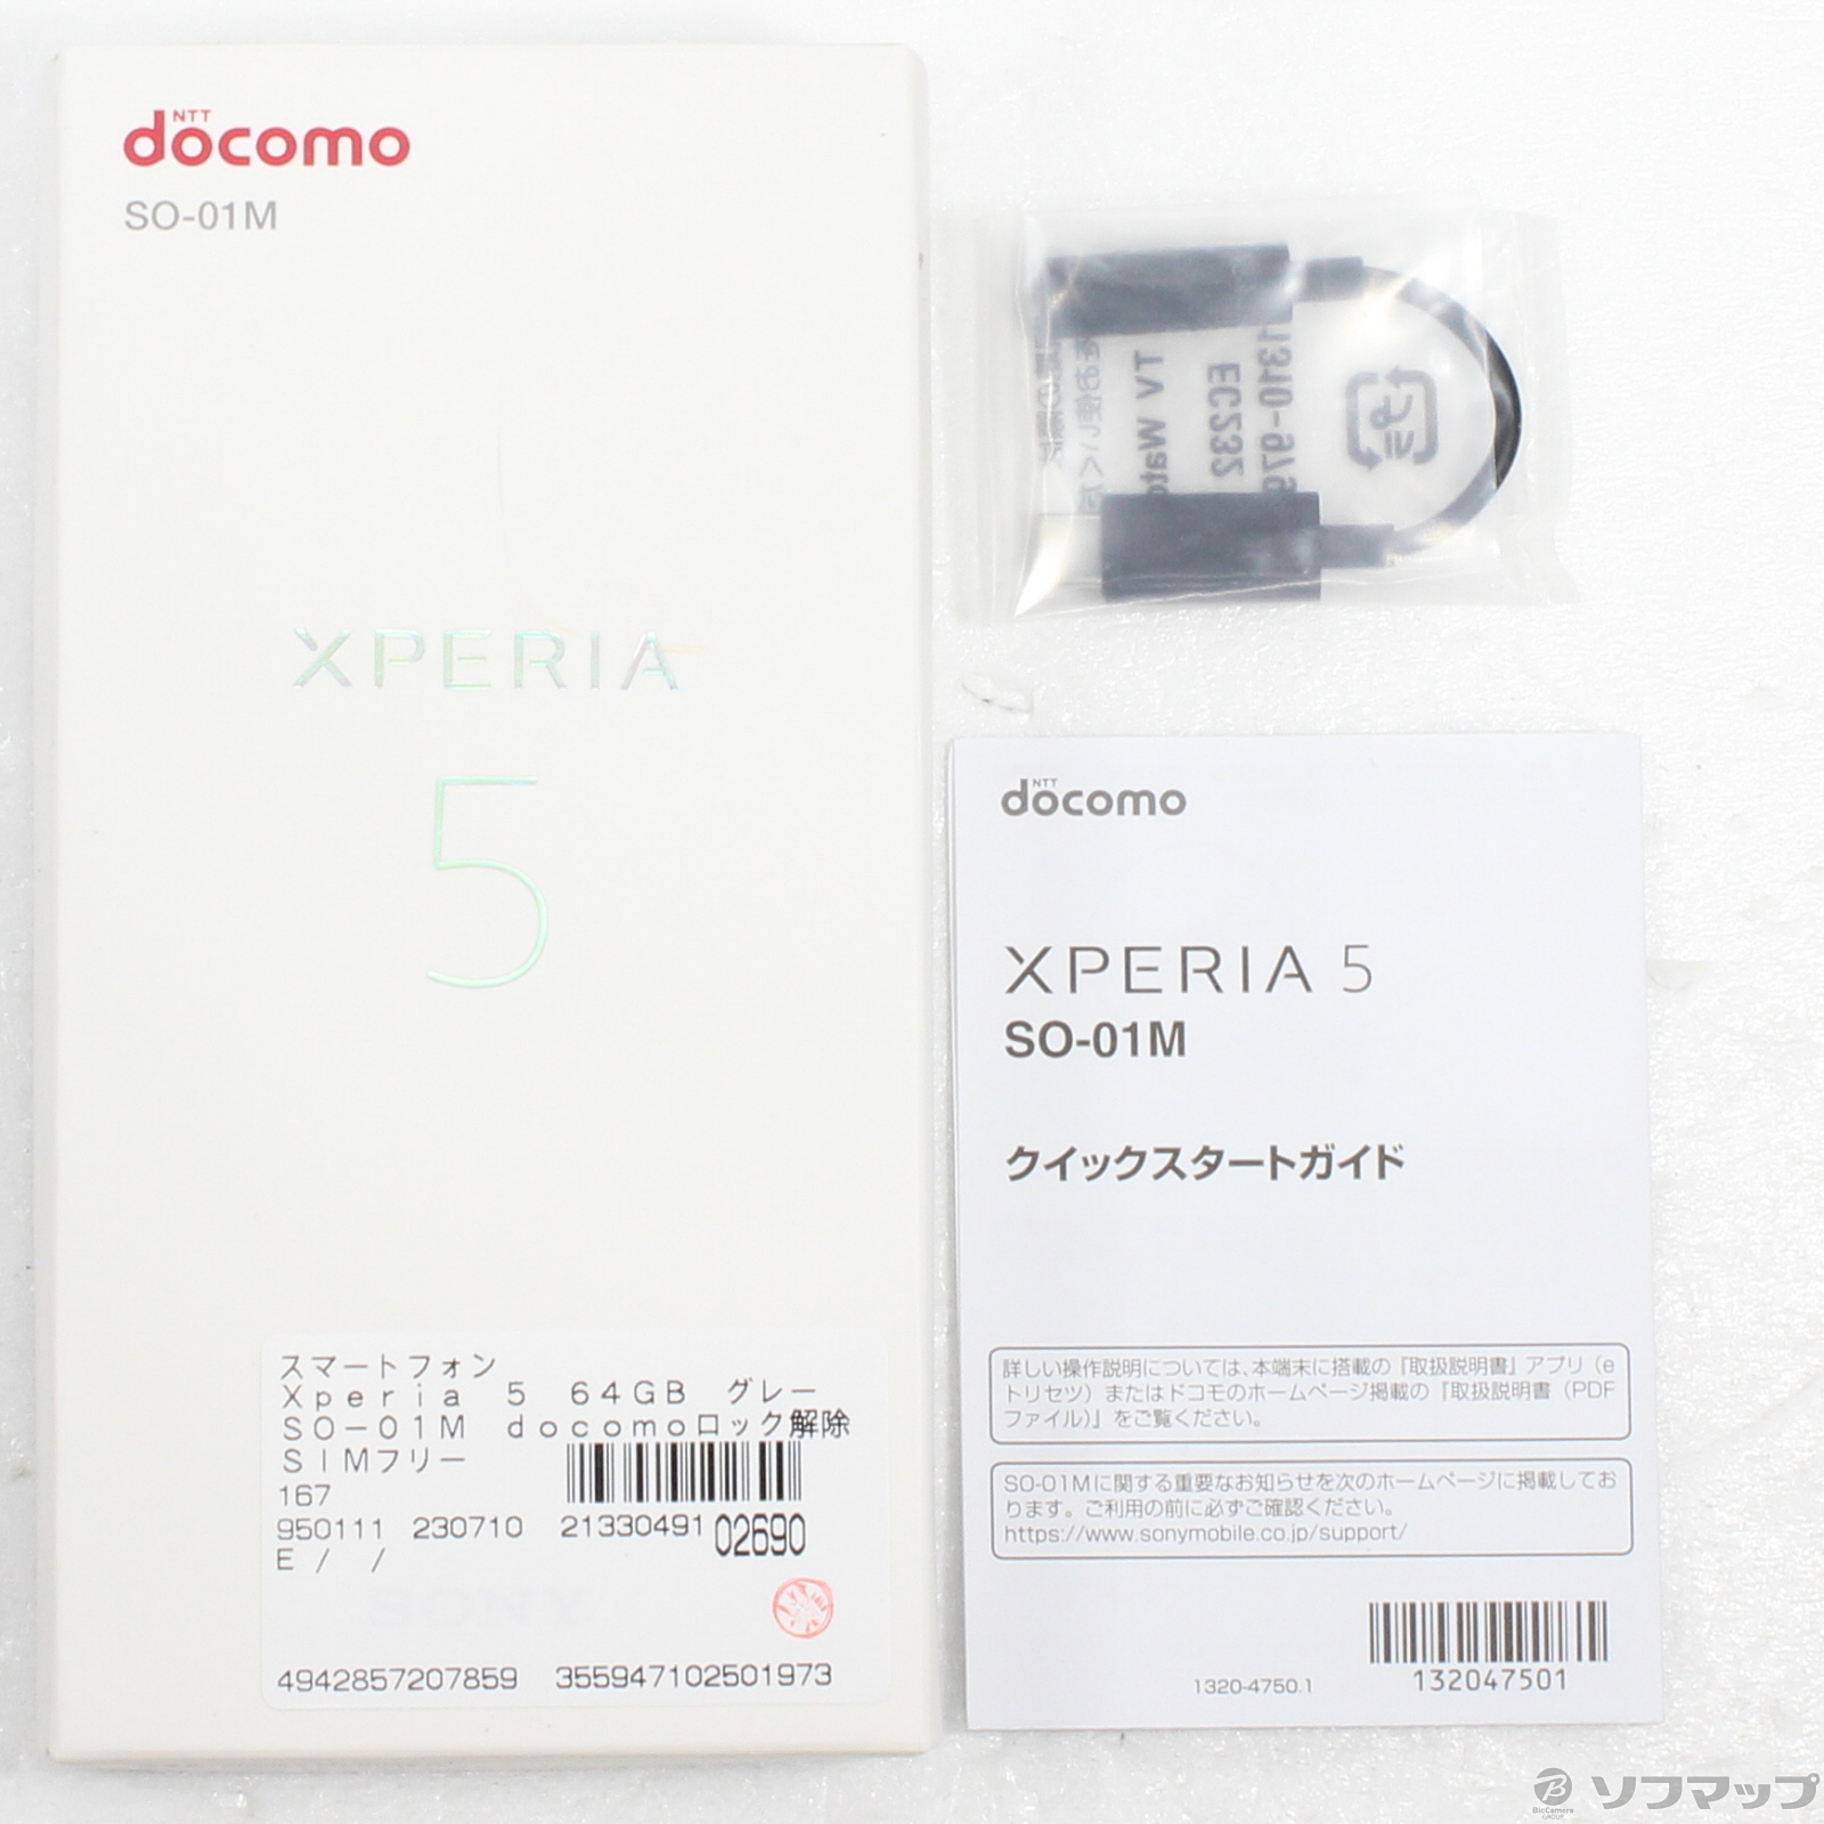 Xperia 5 グレー 64 GB docomo SO-01Mリフレッシュ品 | nate-hospital.com